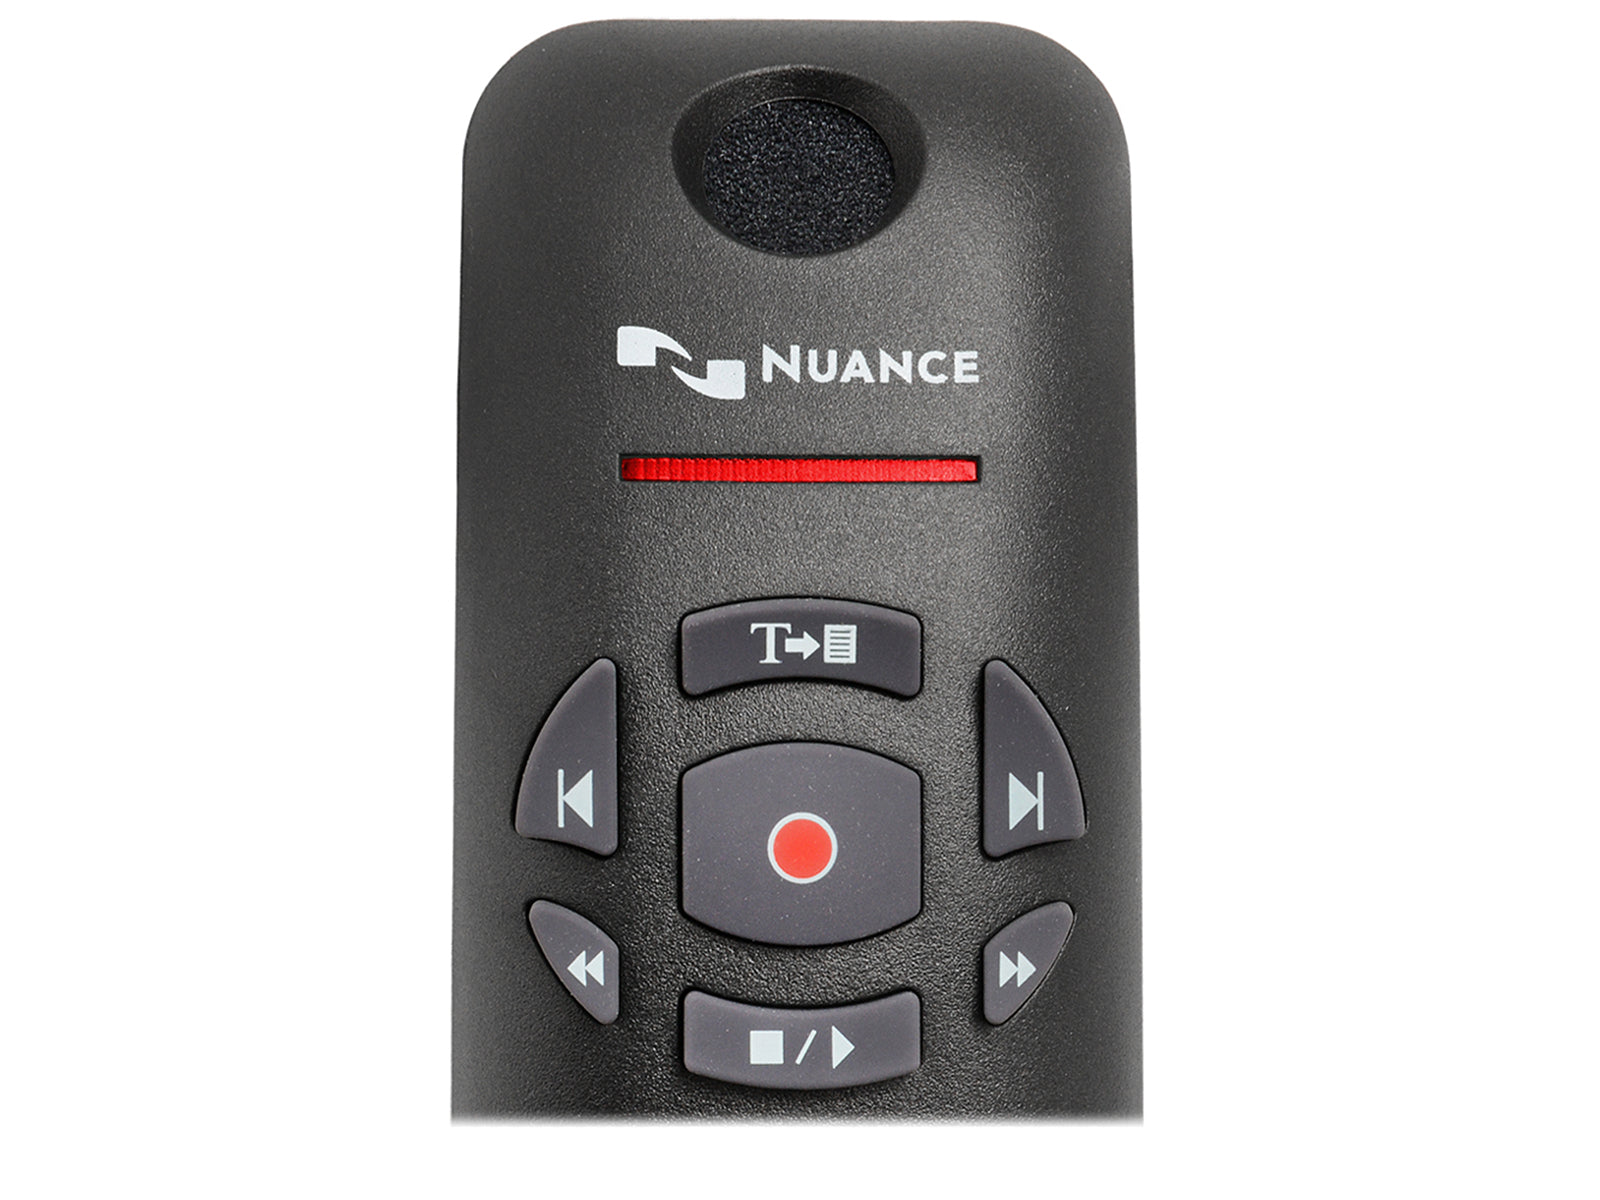 Nuance PowerMic III Diktiermikrofon (0POWM3N) Monitors.com